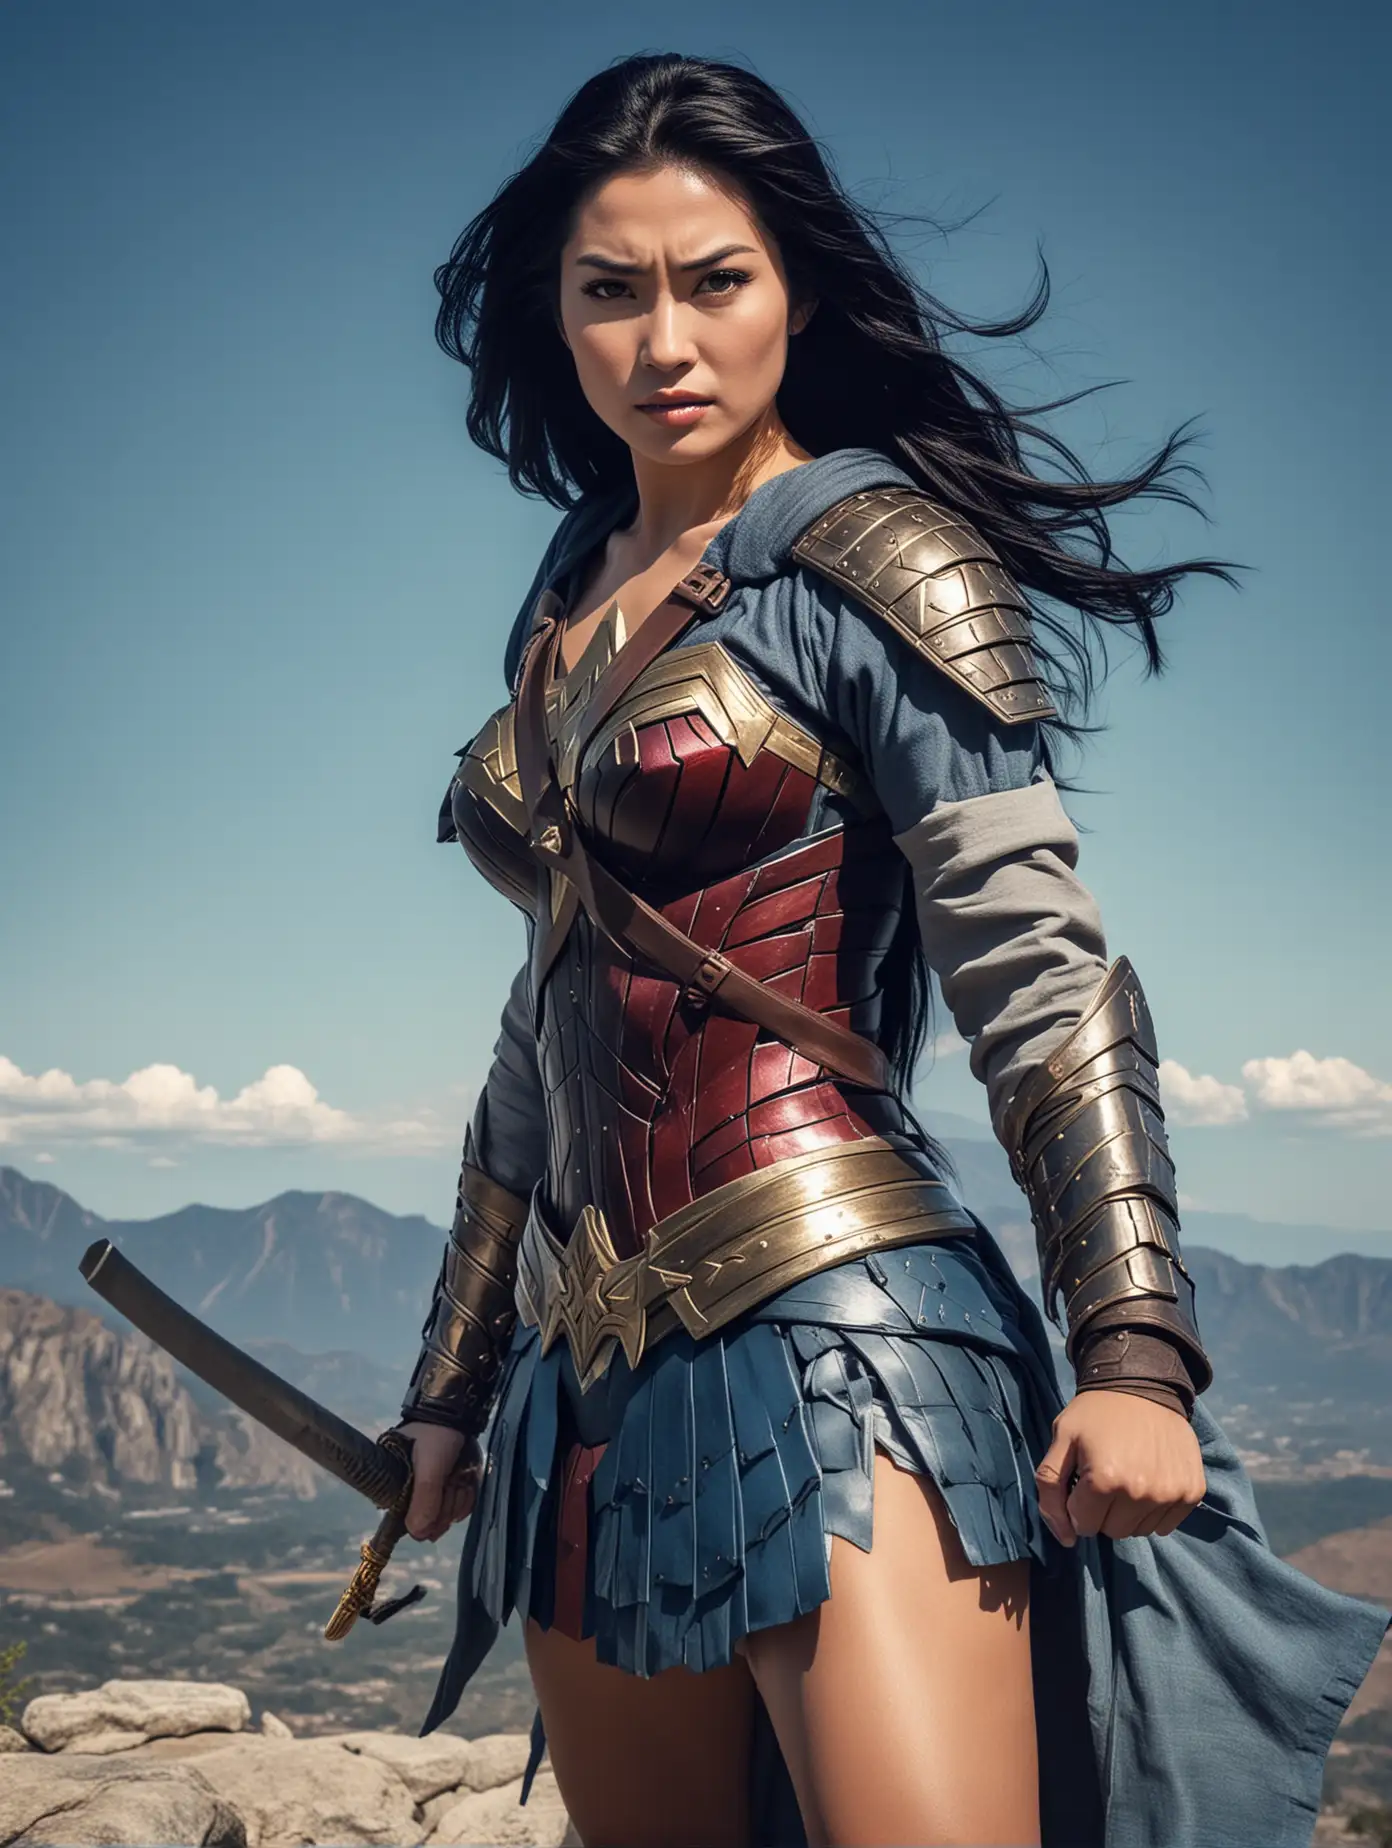 Heroic Samurai Woman as Wonder Woman on Mountain Top